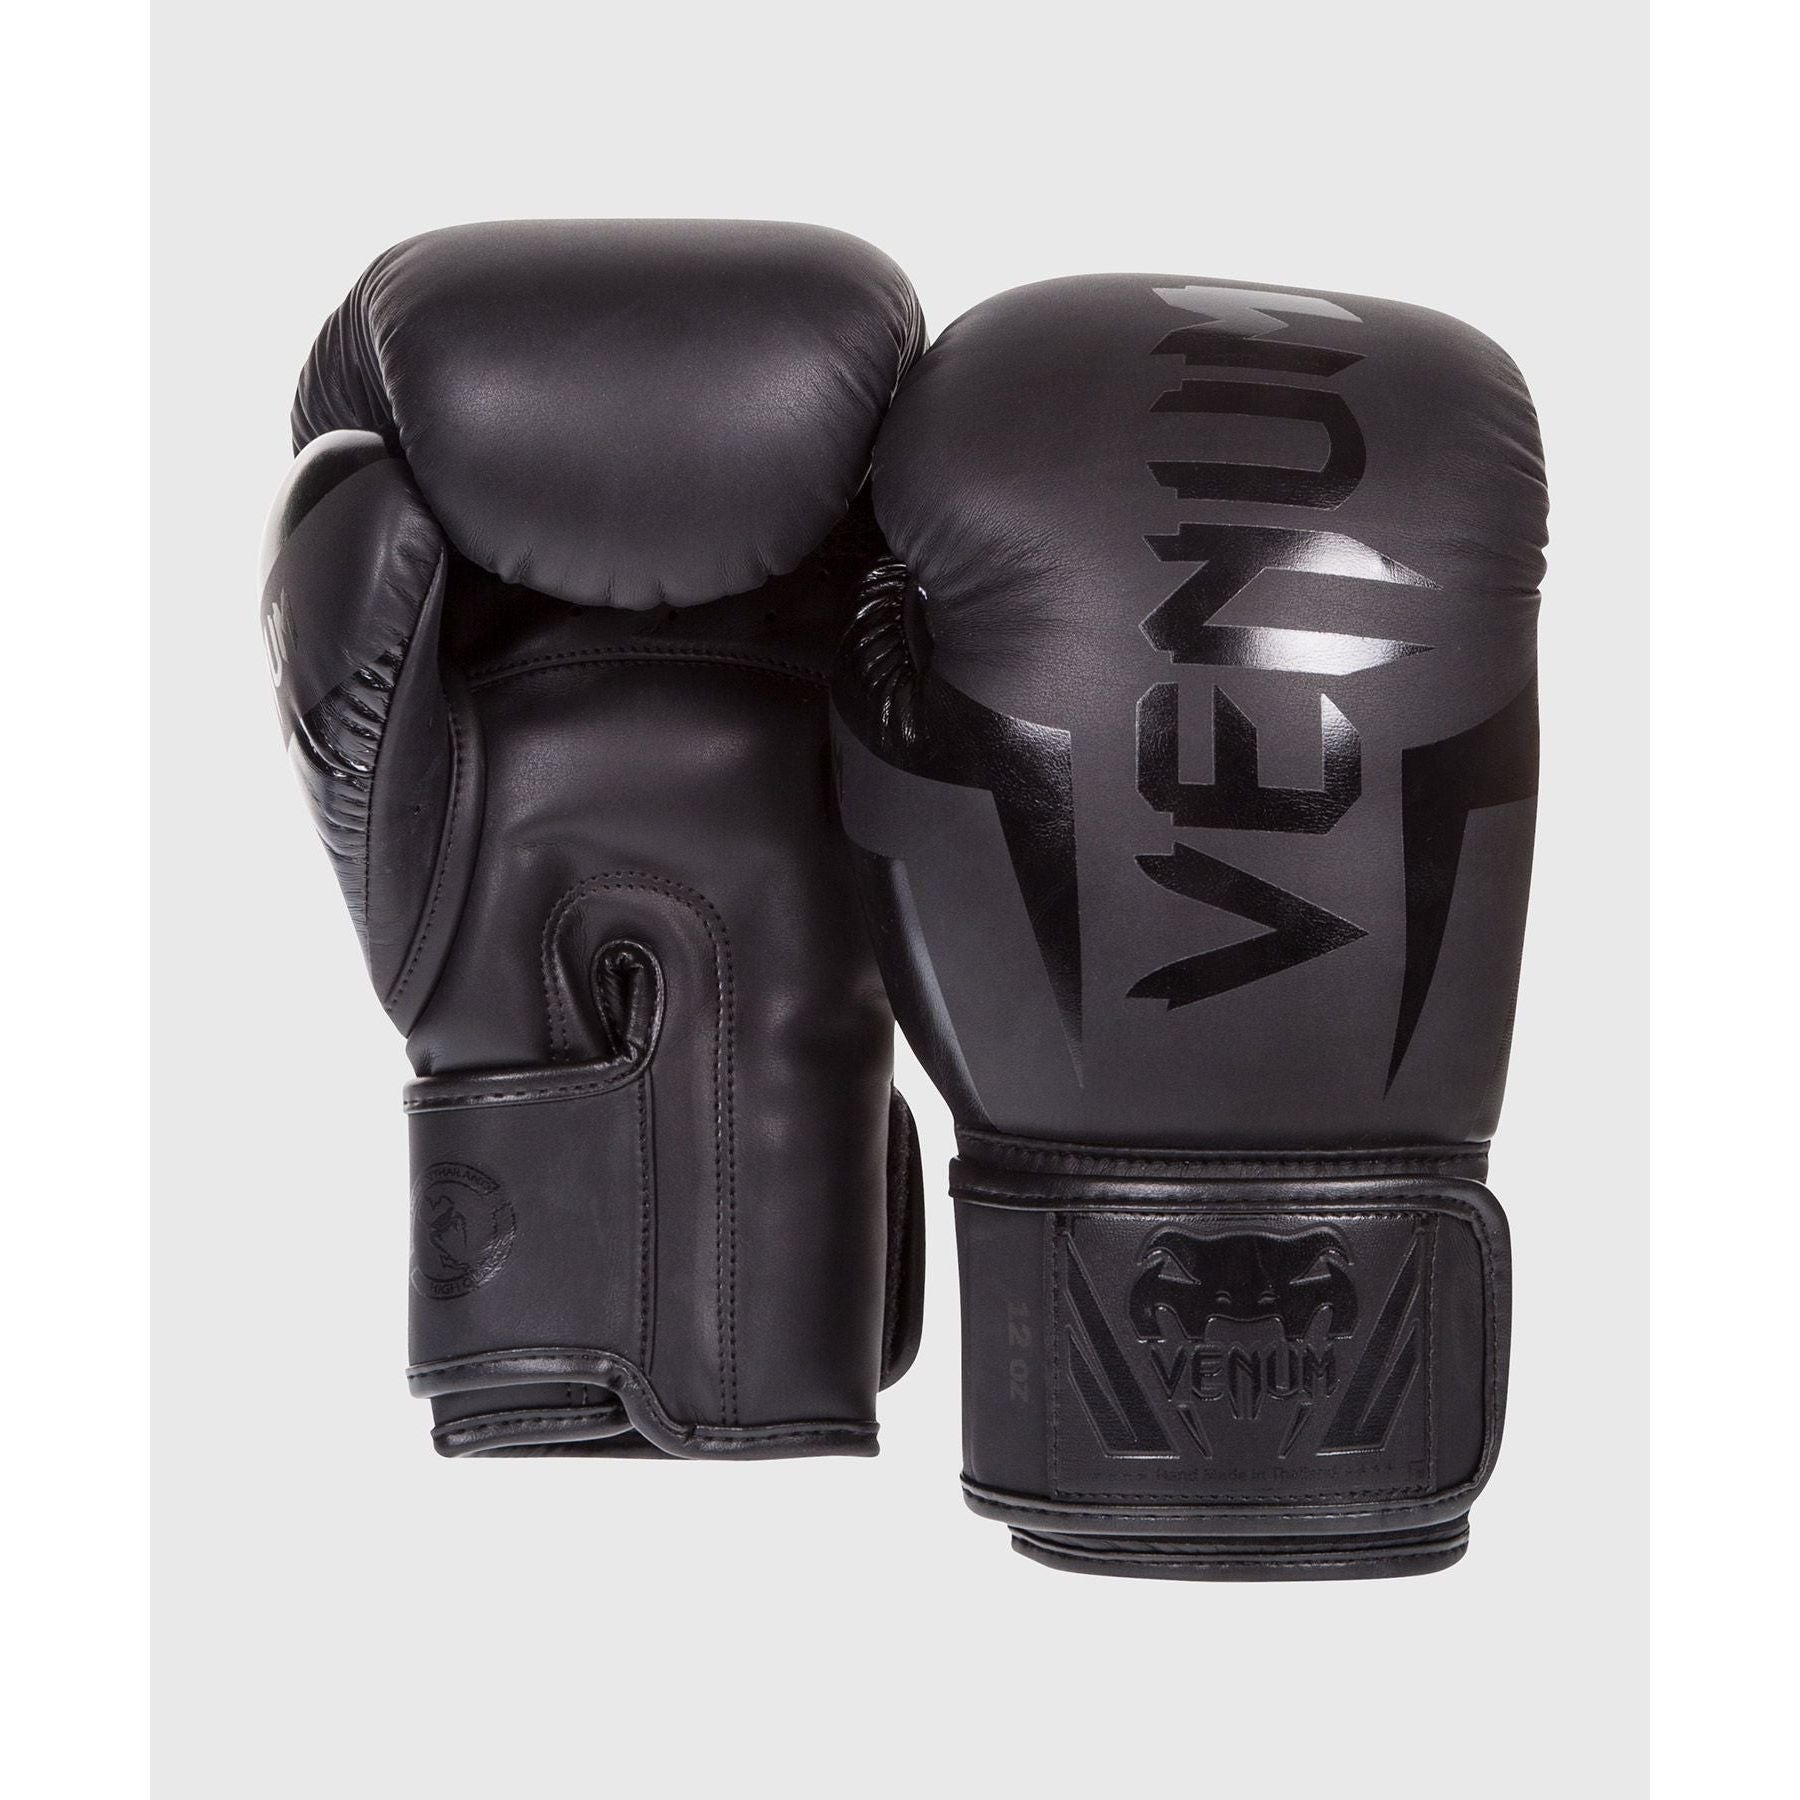 Venum Boxing Gloves Australia - Martial Arts Supplies Perth